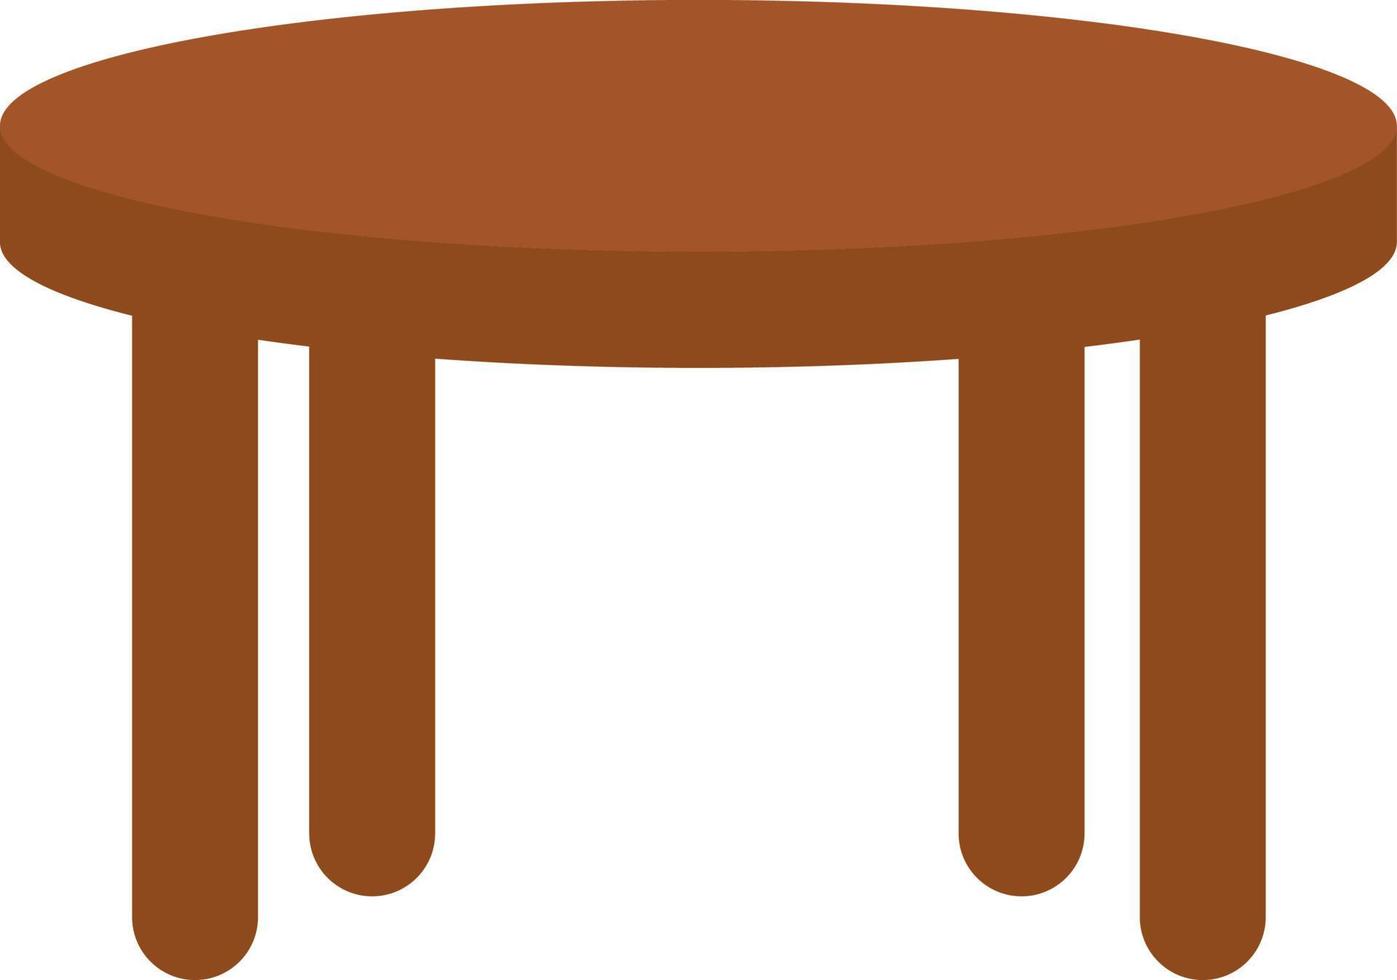 mesa de café de madera, ilustración, vector sobre un fondo blanco